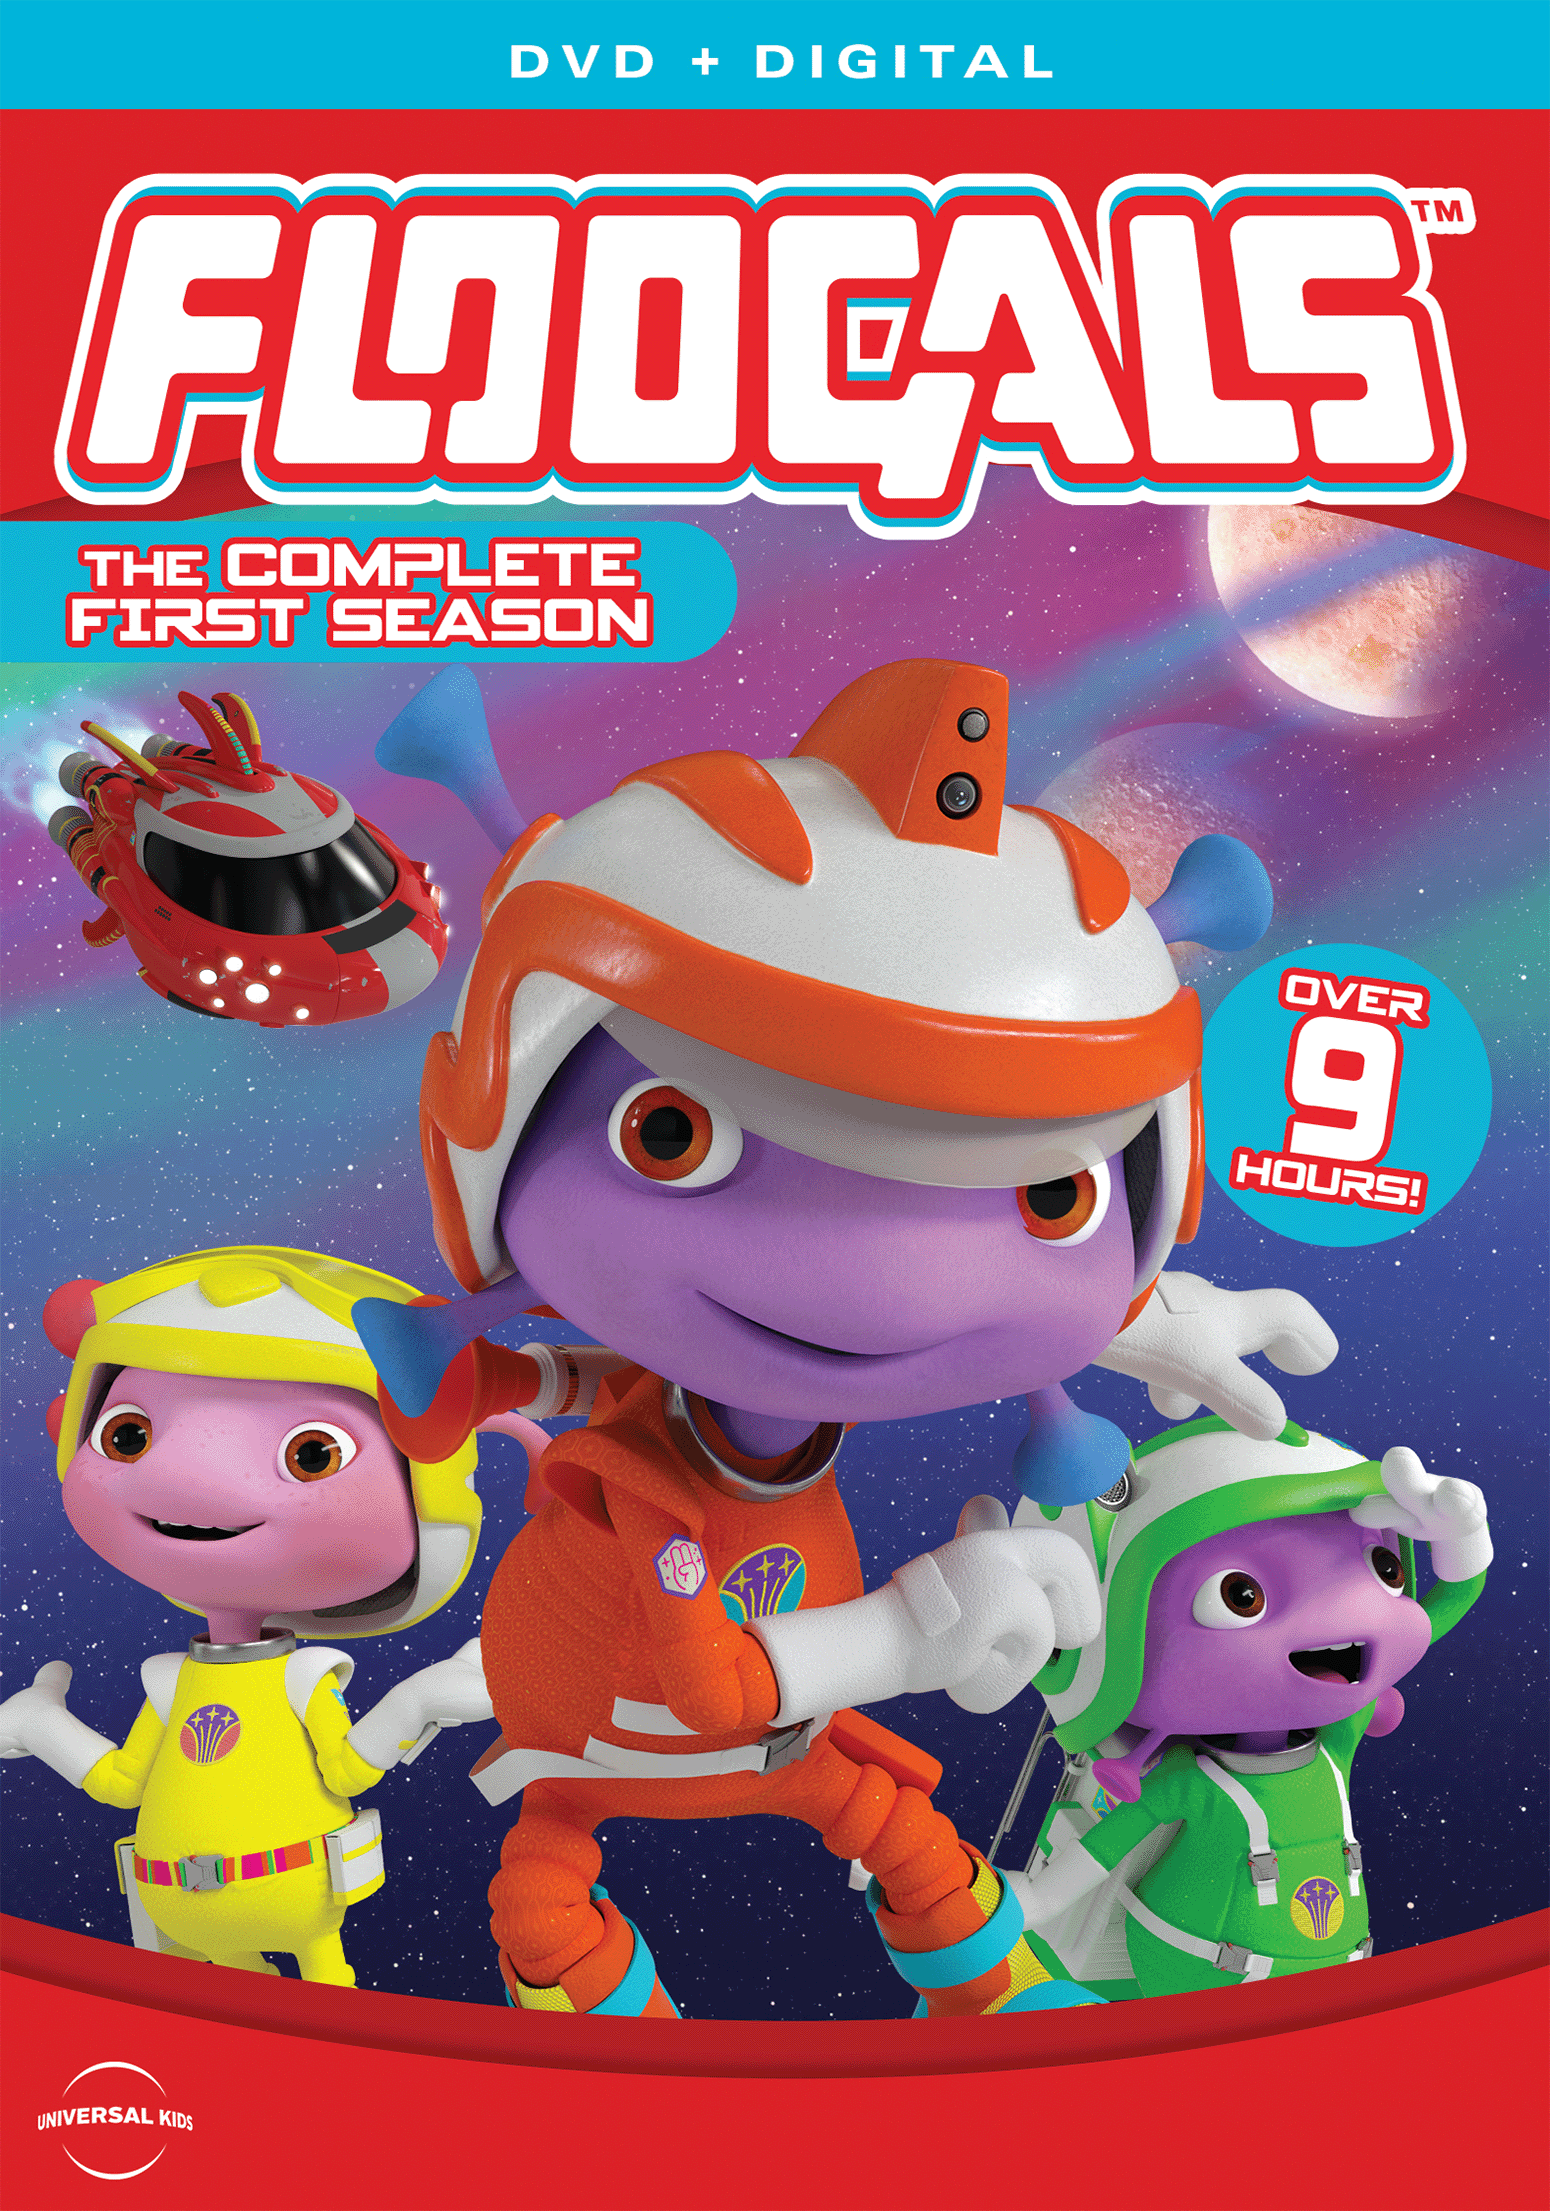 Floogals: Season One * Mini Aliens Help Preschoolers Discover How The World Works